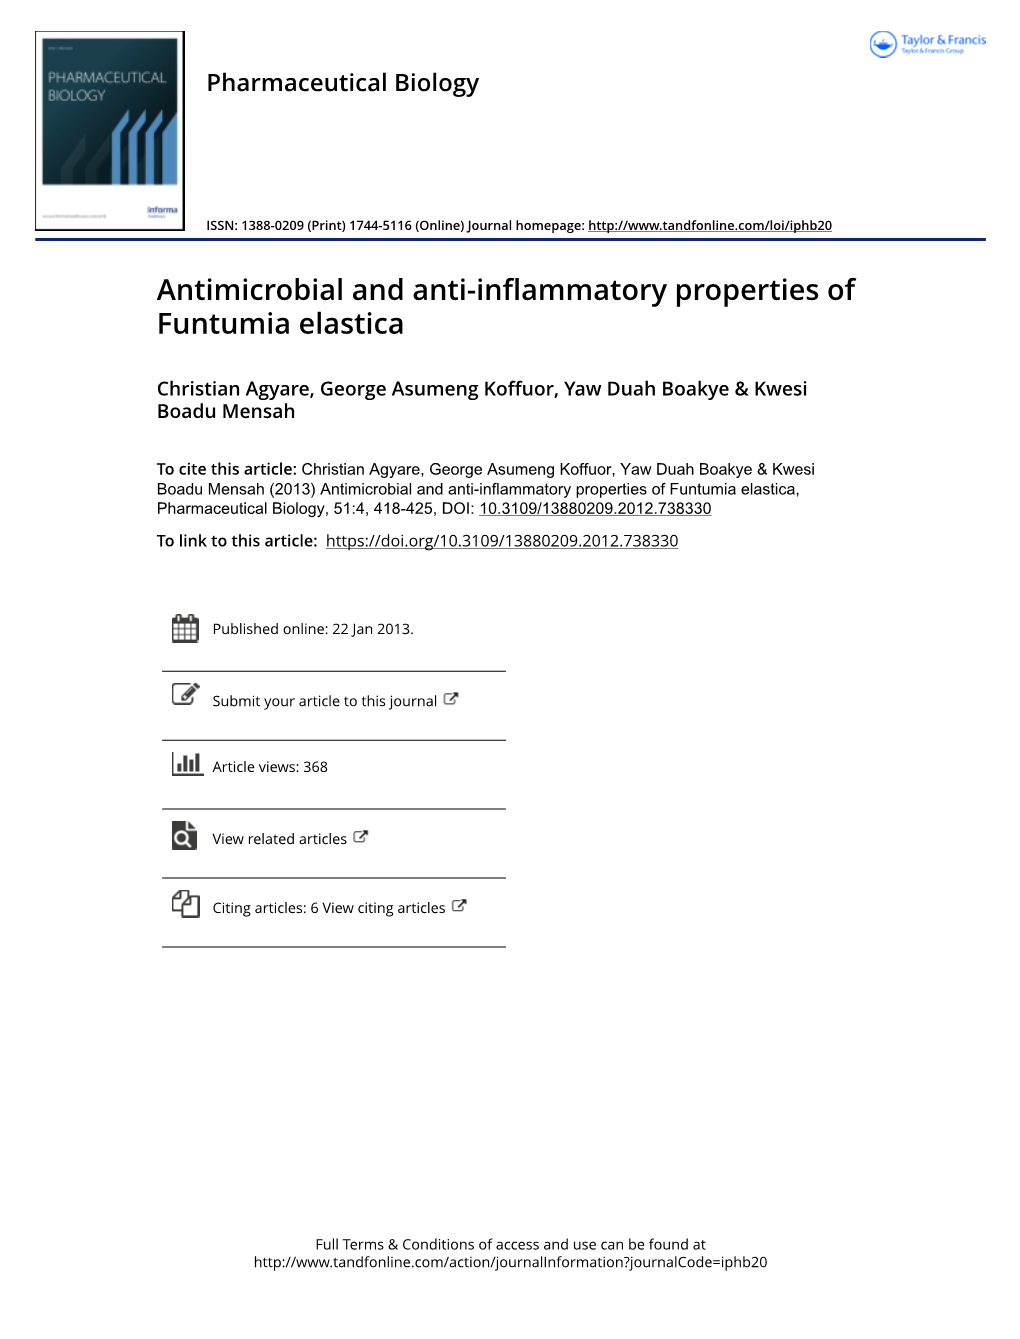 Antimicrobial and Anti-Inflammatory Properties of Funtumia Elastica